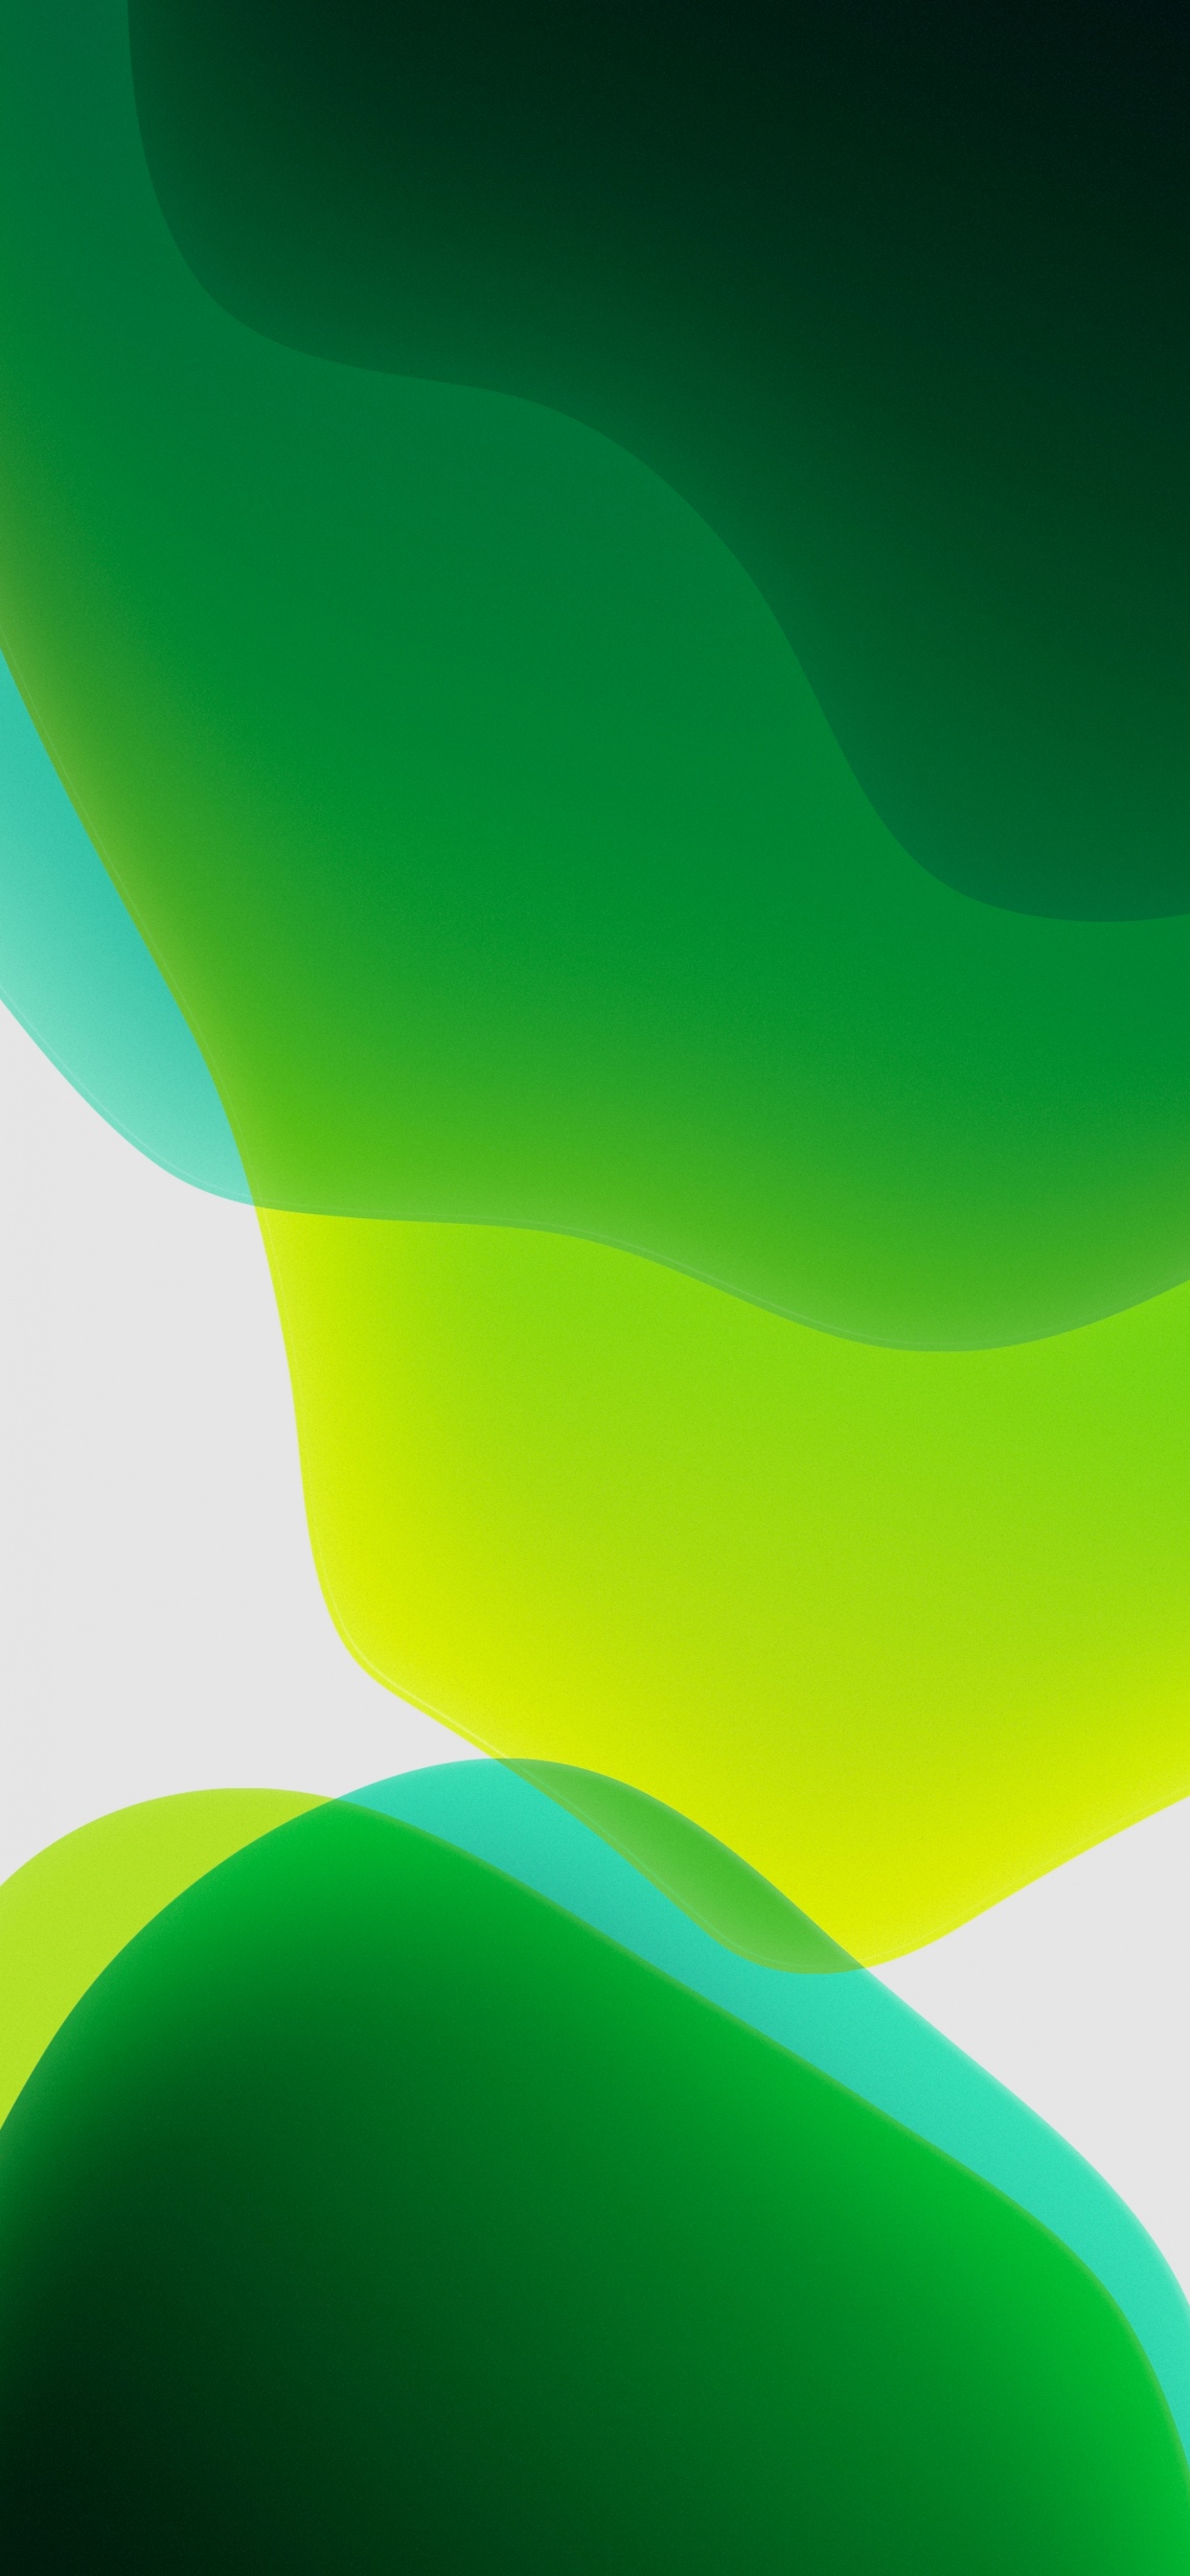 iPadOS Wallpaper 4K, Stock, Green, Abstract